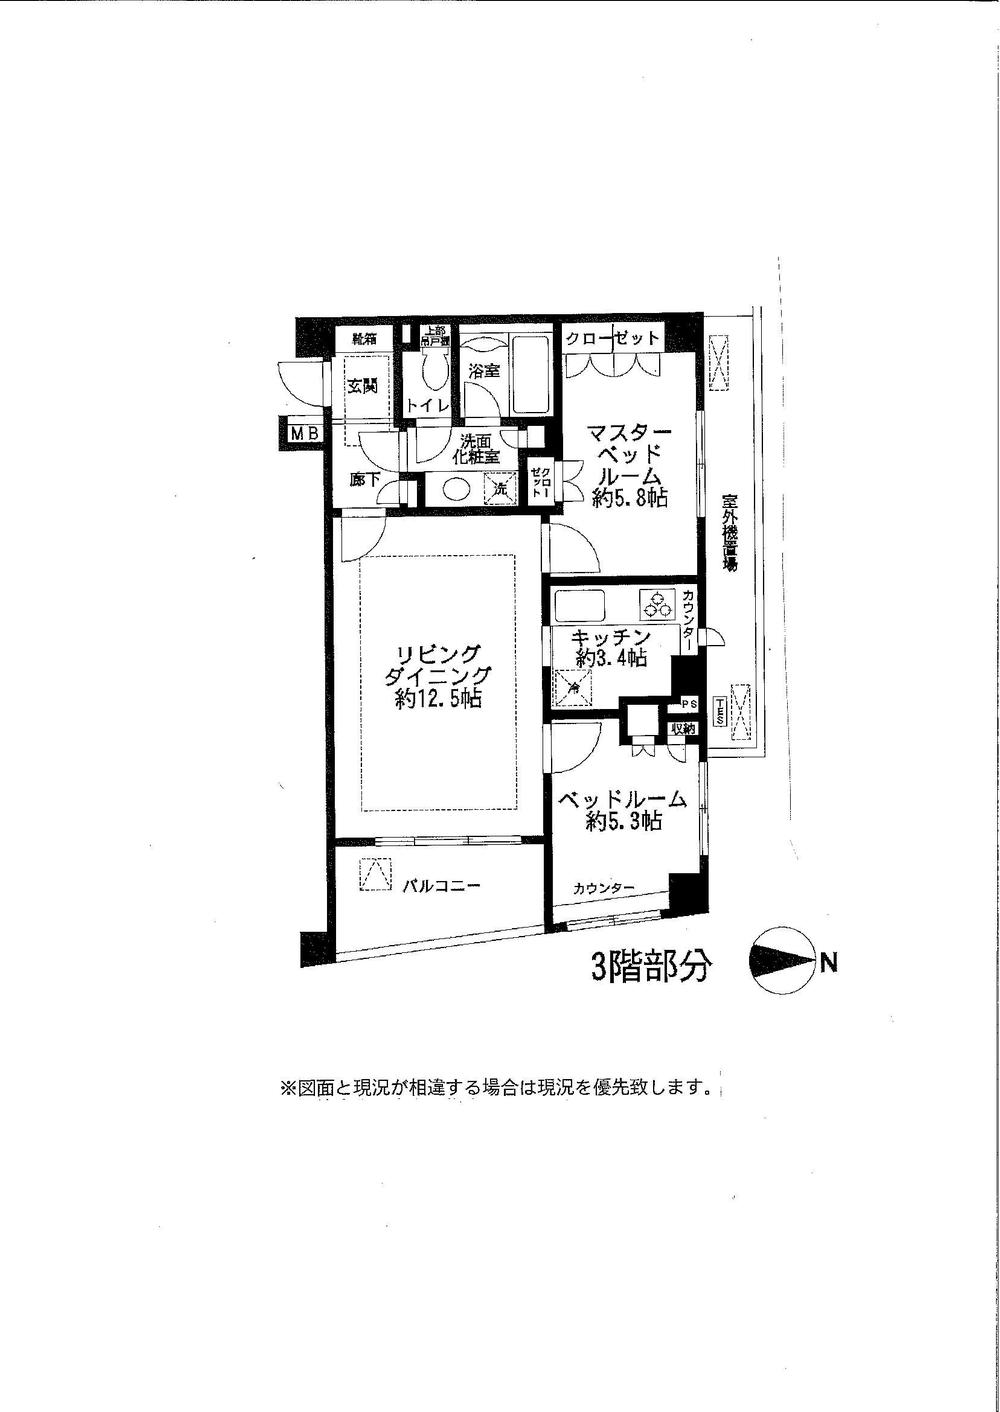 Floor plan. 2LDK, Price 44,800,000 yen, Occupied area 58.45 sq m , Balcony area 6.01 sq m